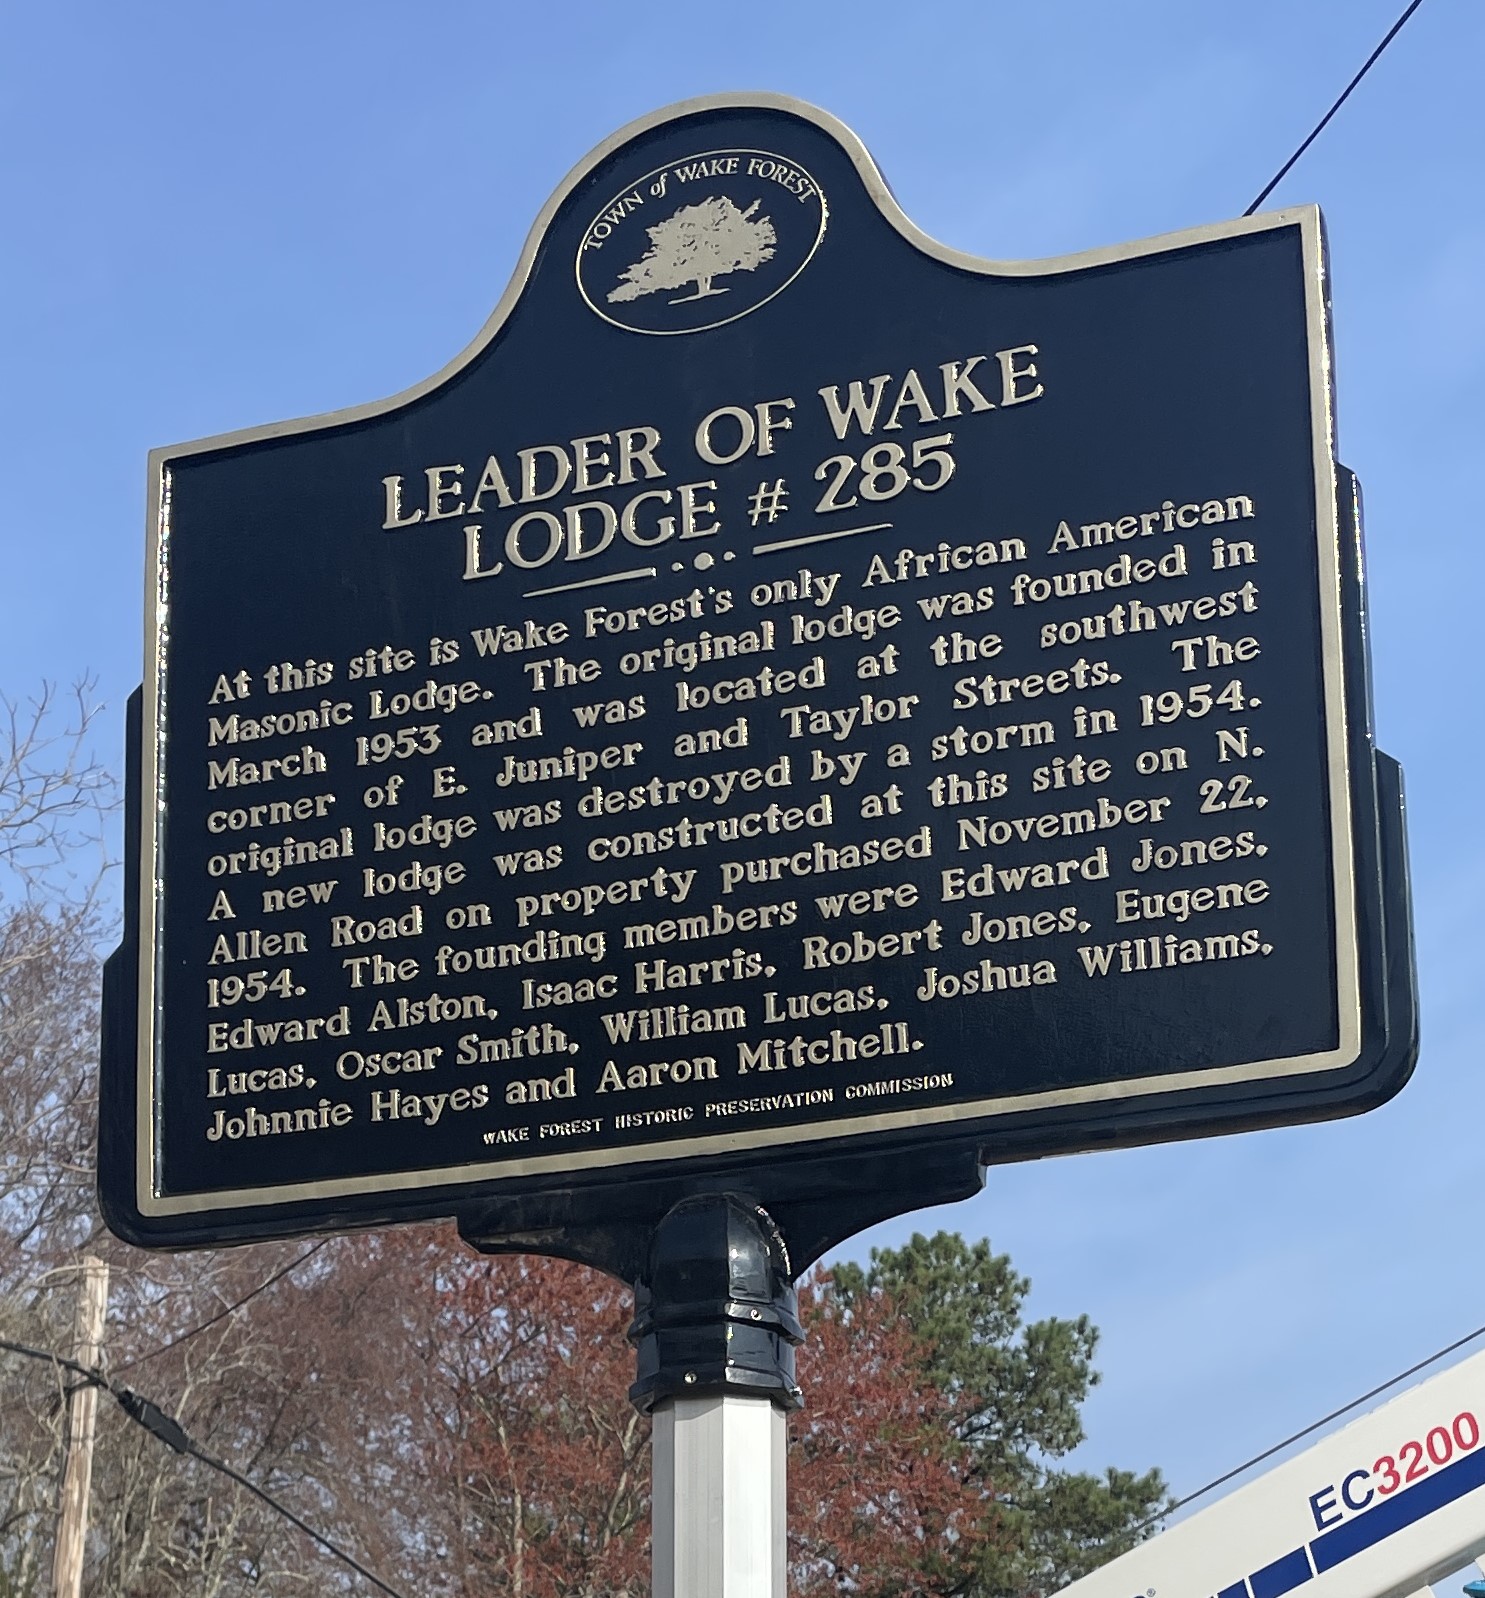 leader of wake lodge # 285 marker